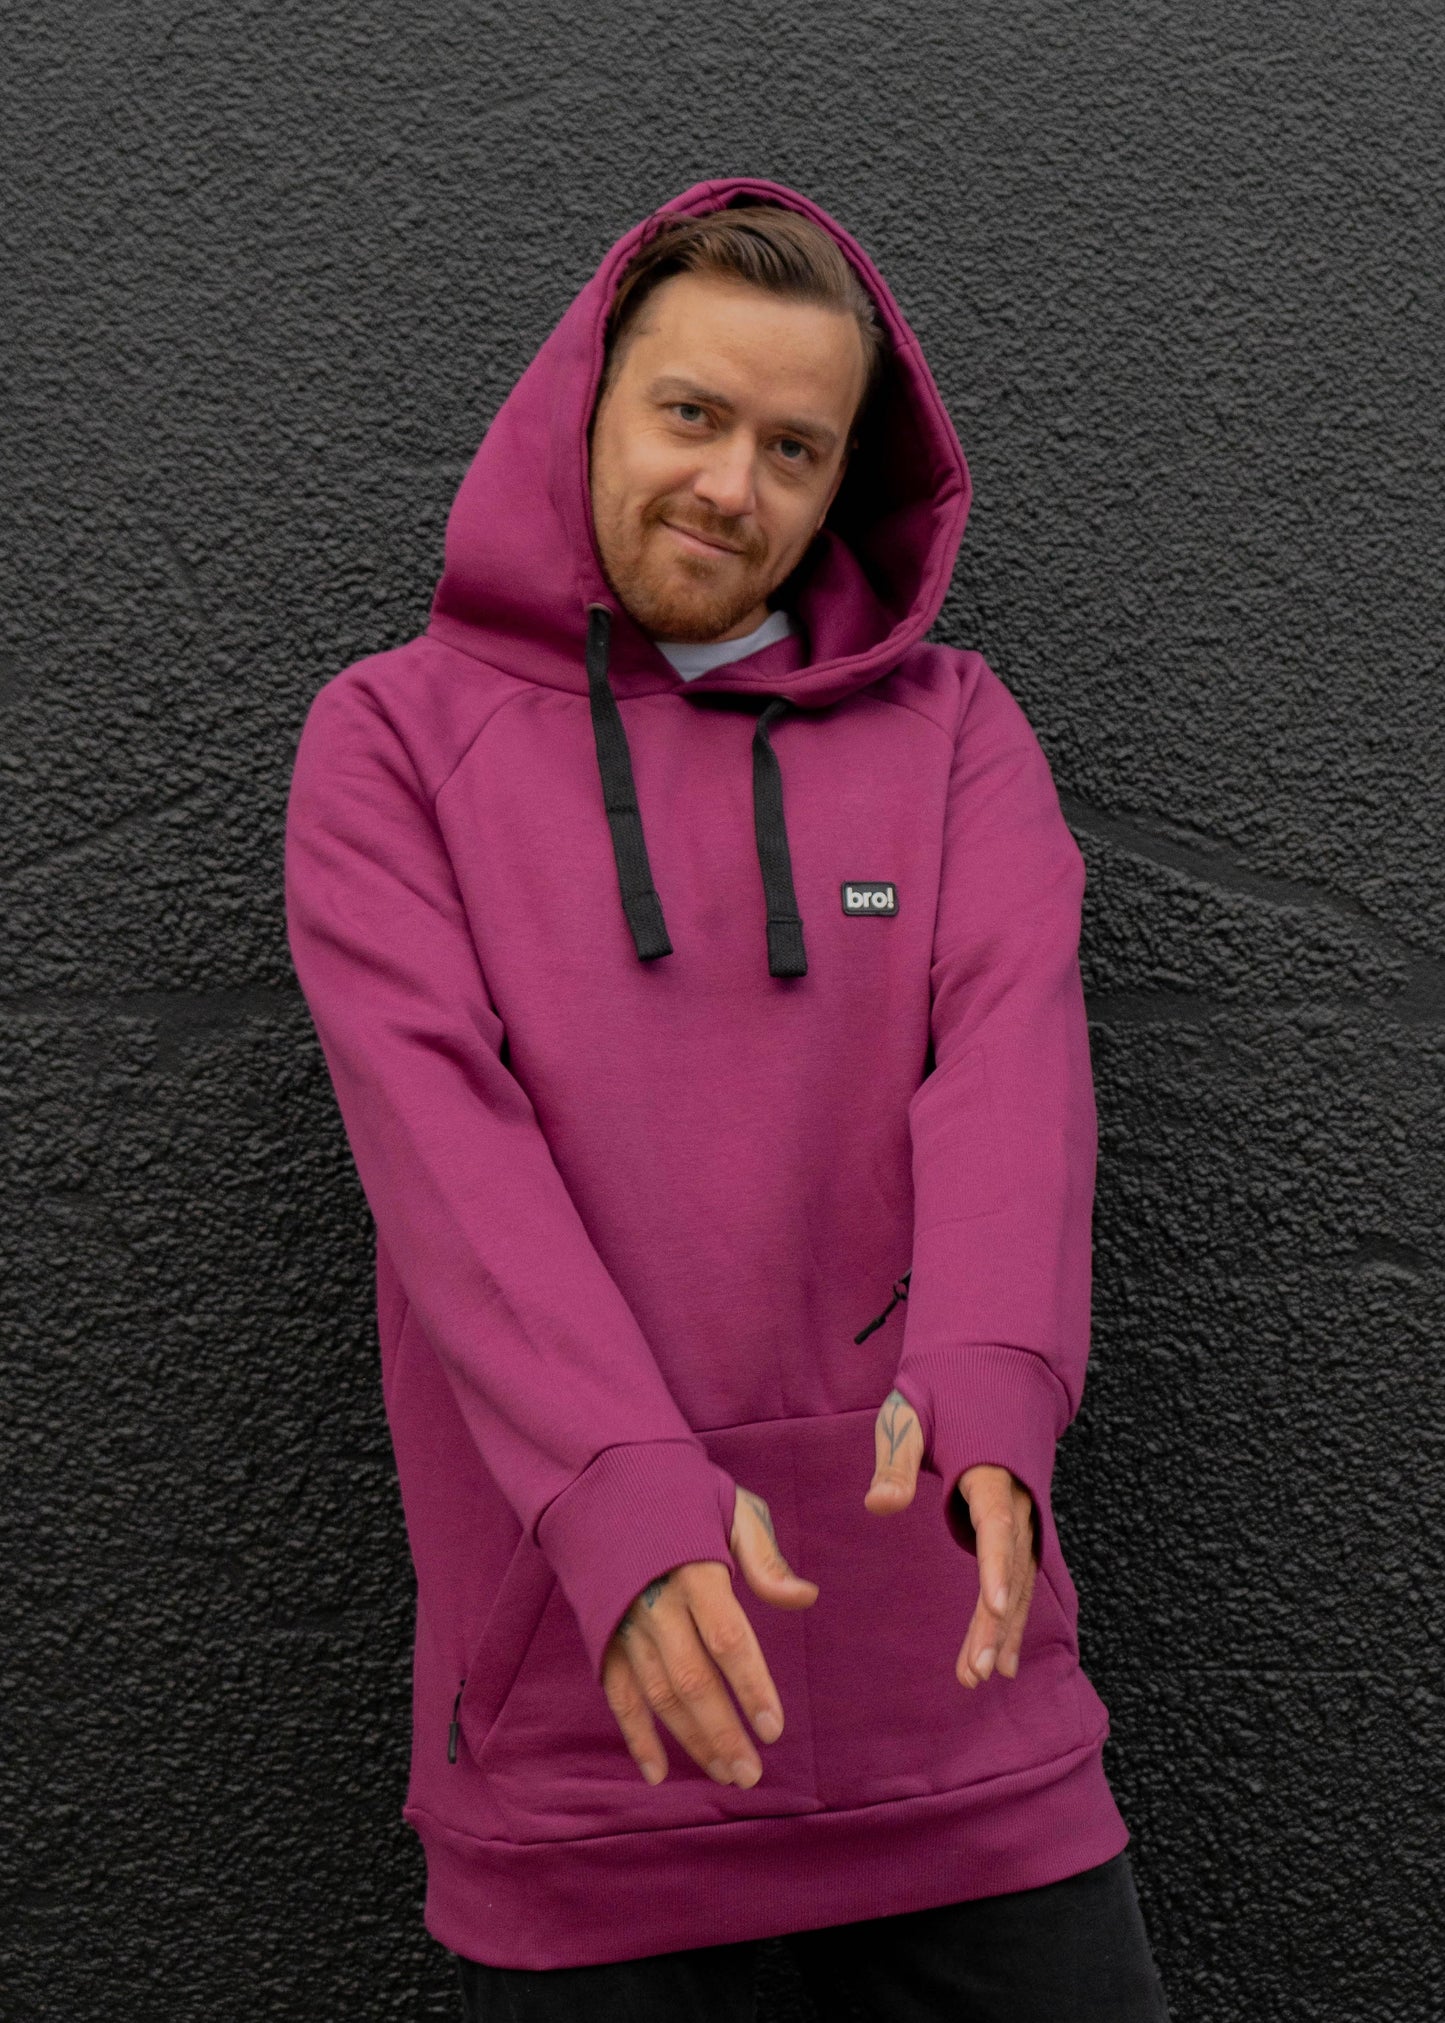 bro! park edition hoodie (burgundy)